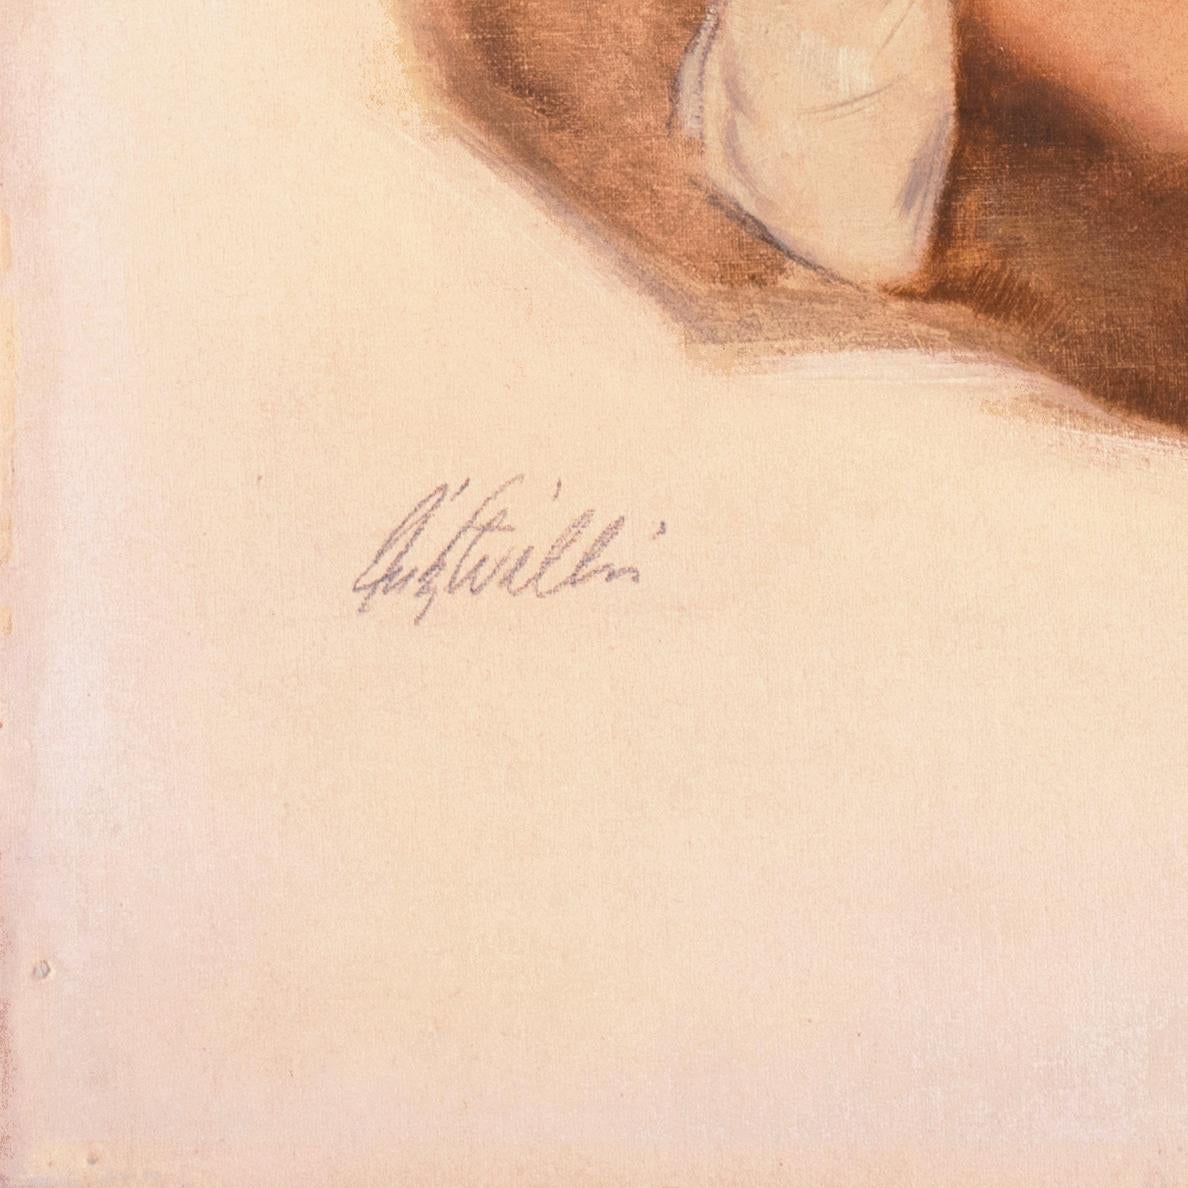 'Venus in Furs', American Pin-Up Illustration, Nude, Leopold von Sacher-Masoch 5